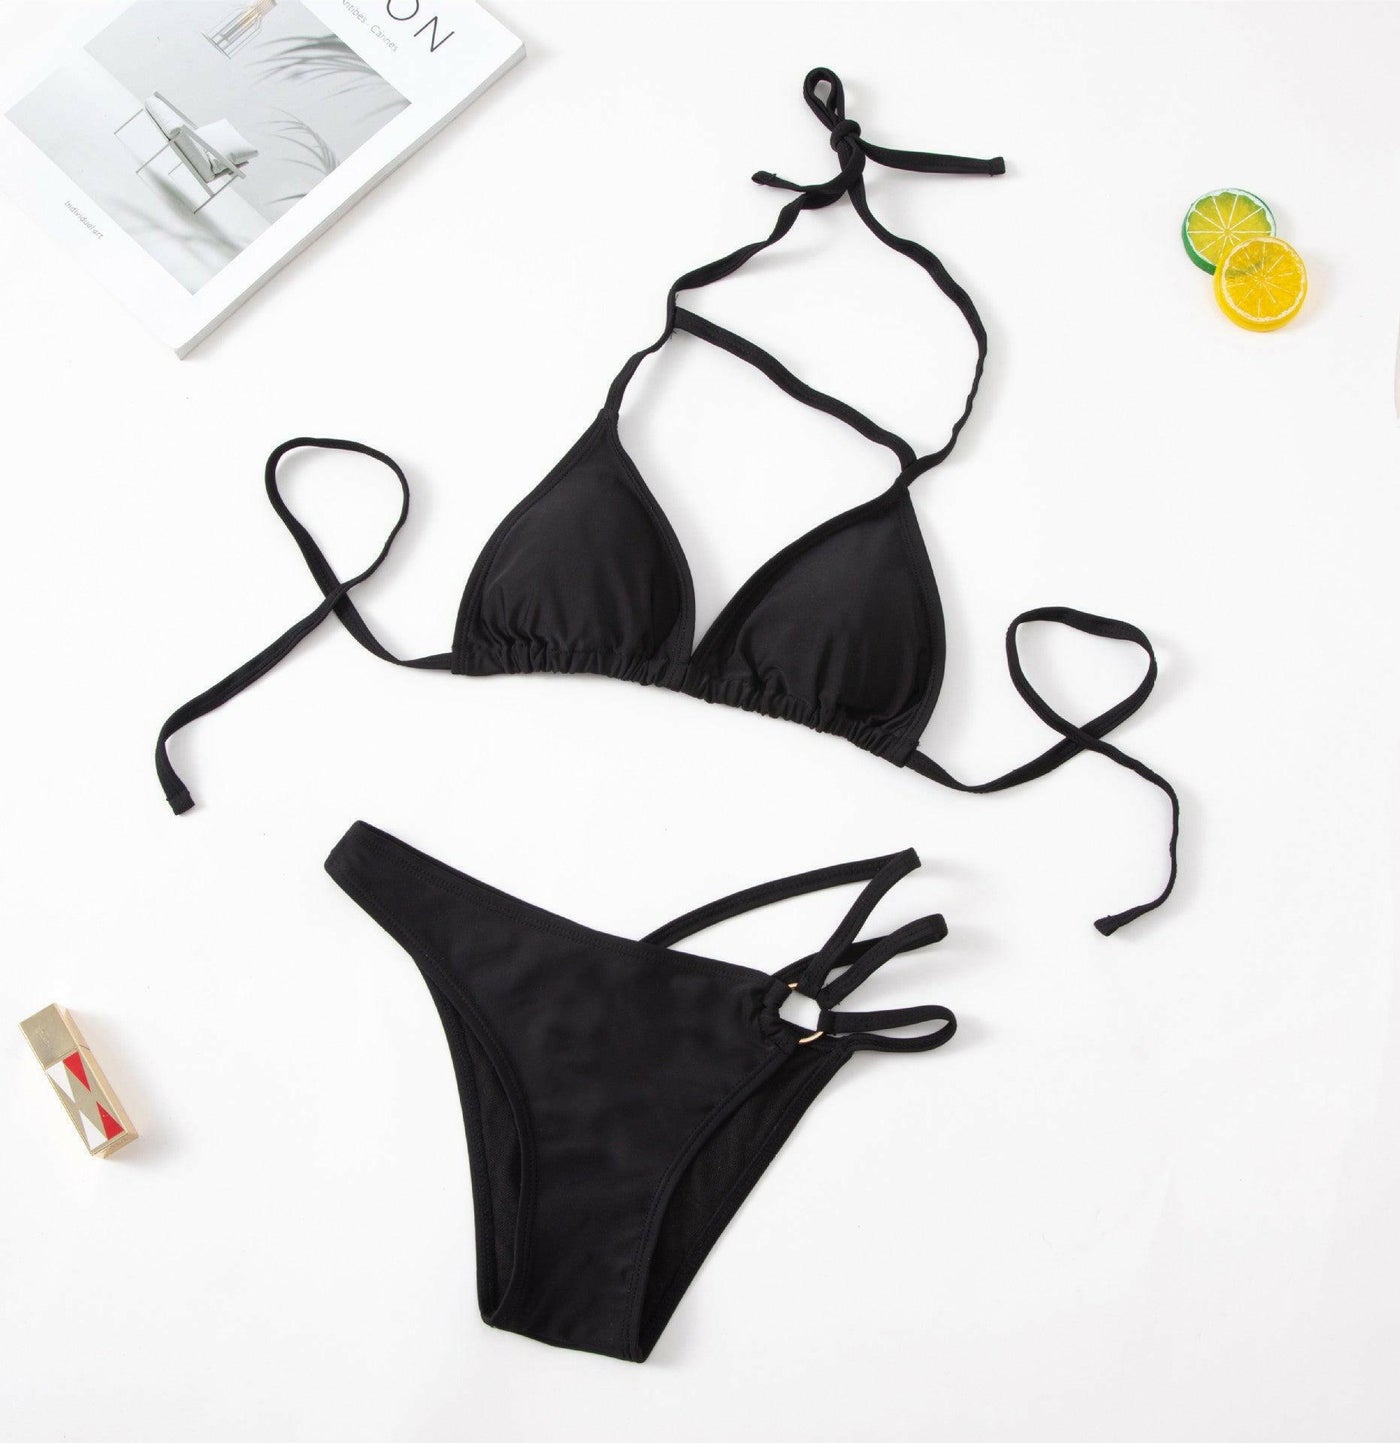 Elise Bikini two piece swimsuit-Black - La Belle Gina Boutique